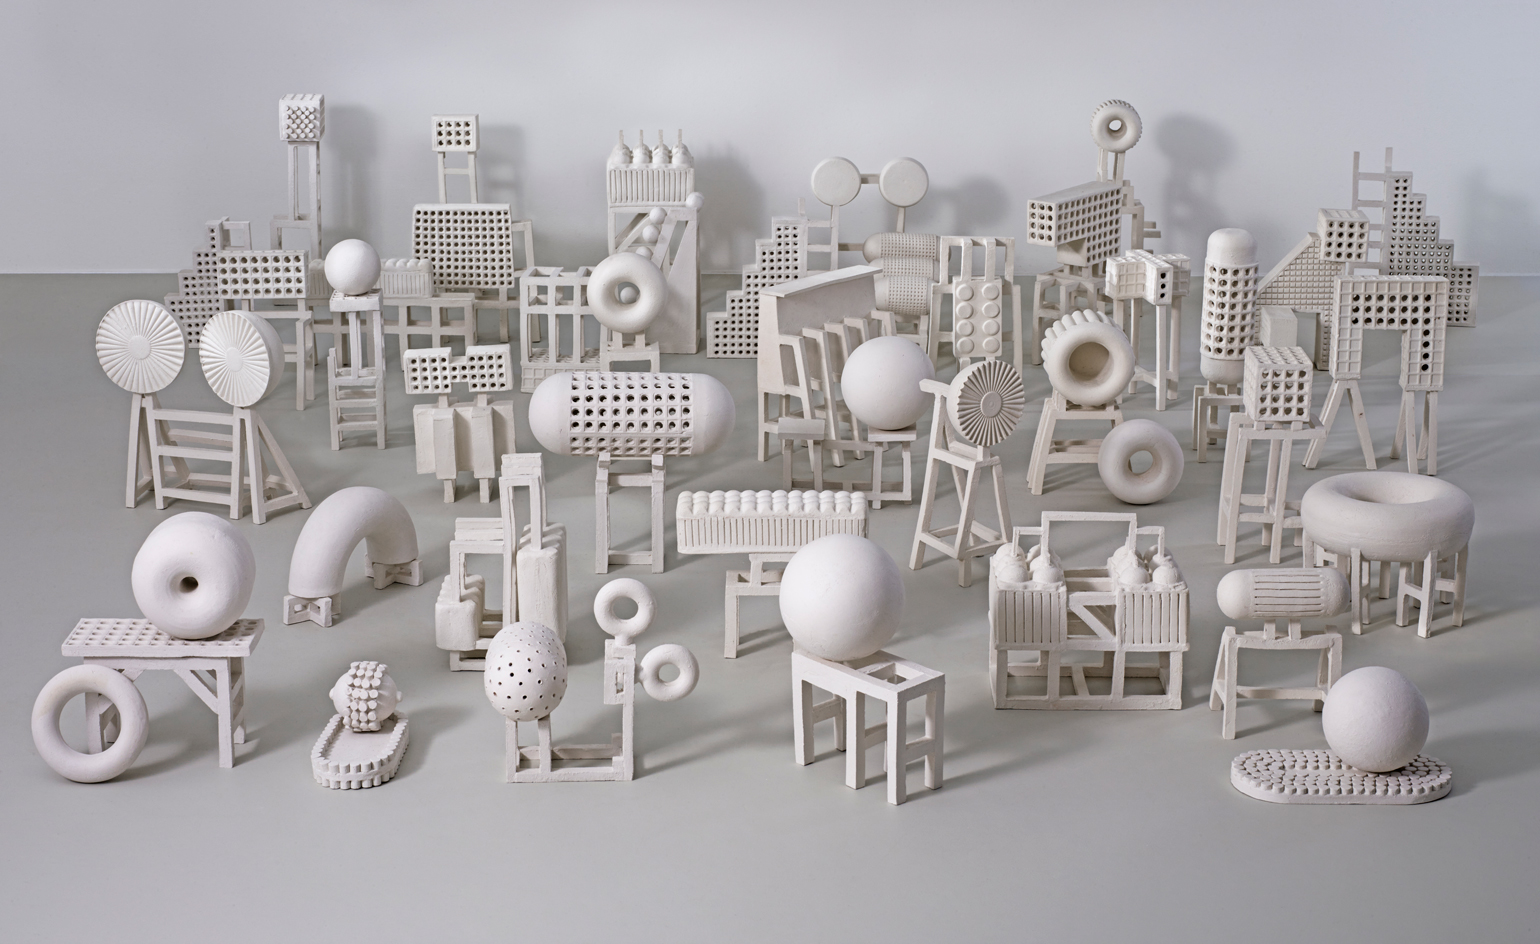 Miro Made This: Architect-Designed Ceramics for Everyday Life